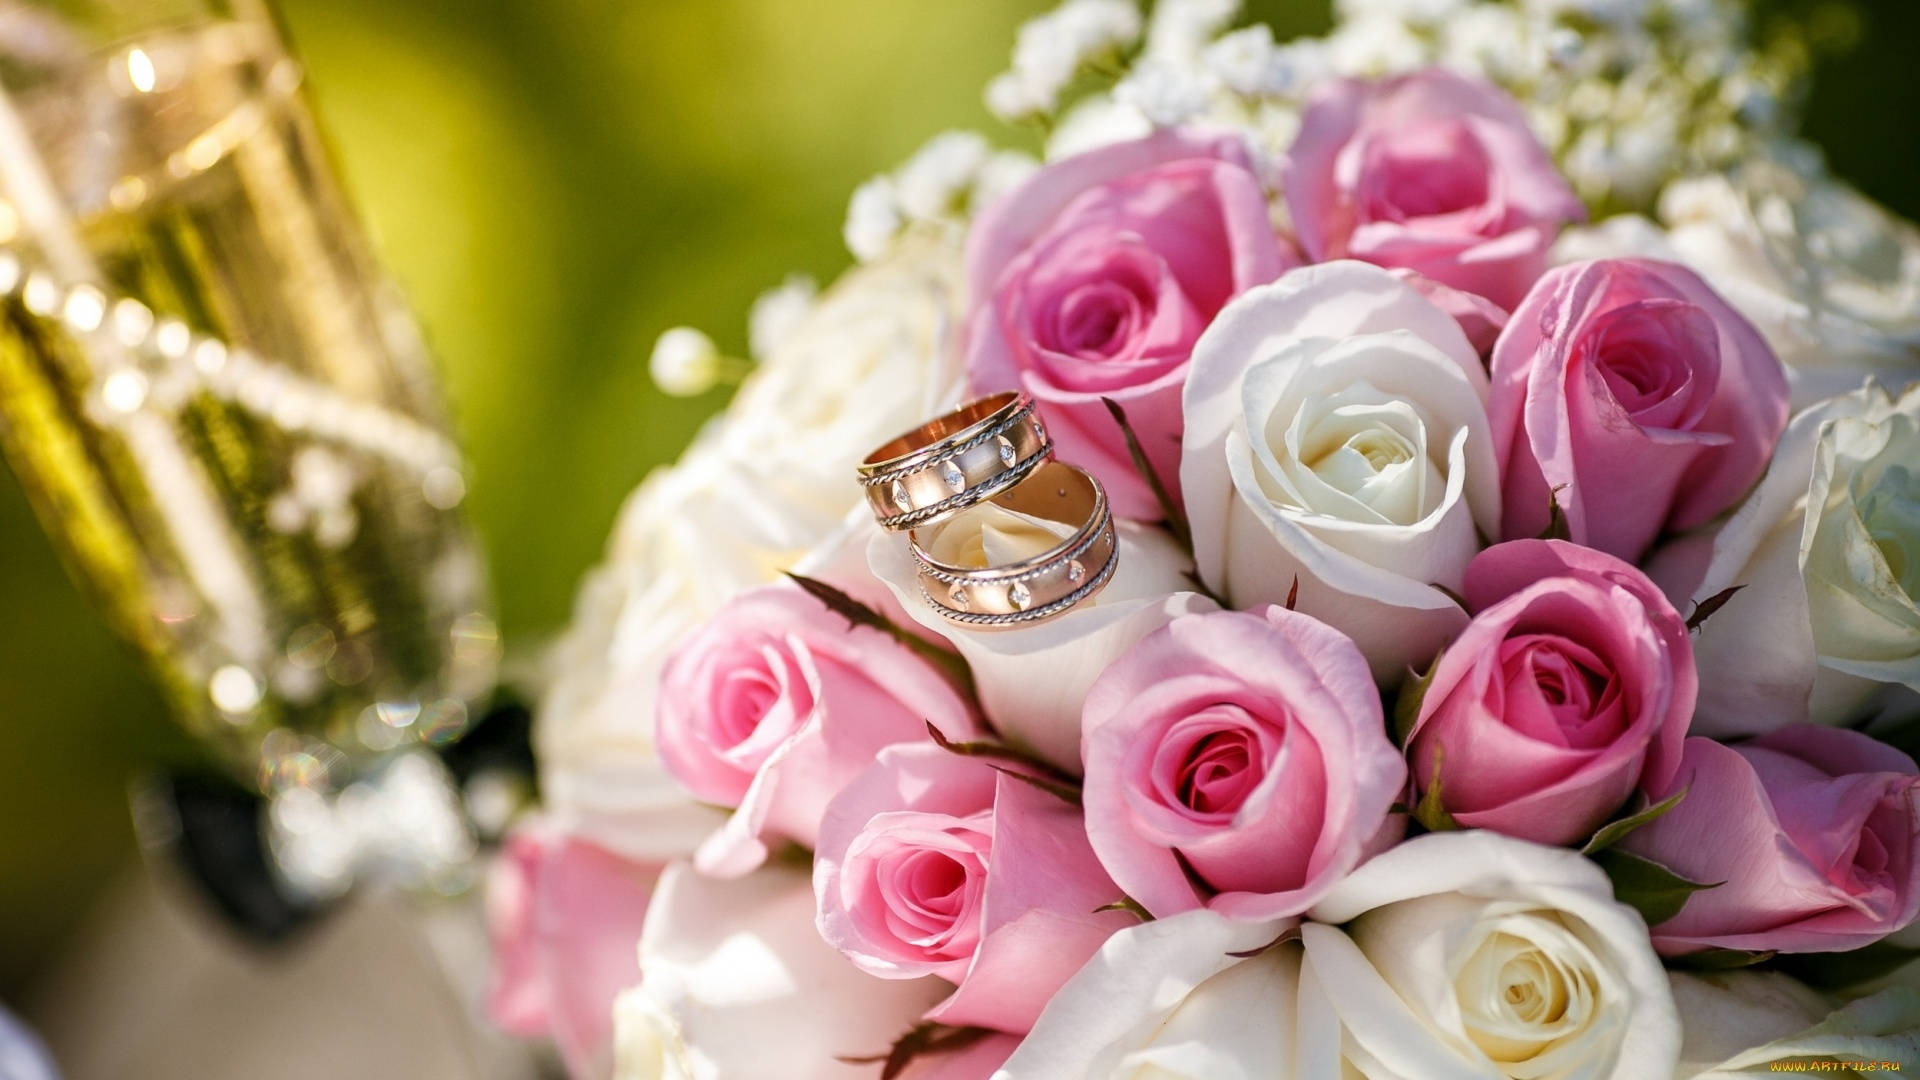 Wedding Rings On Bouquet Wallpaper